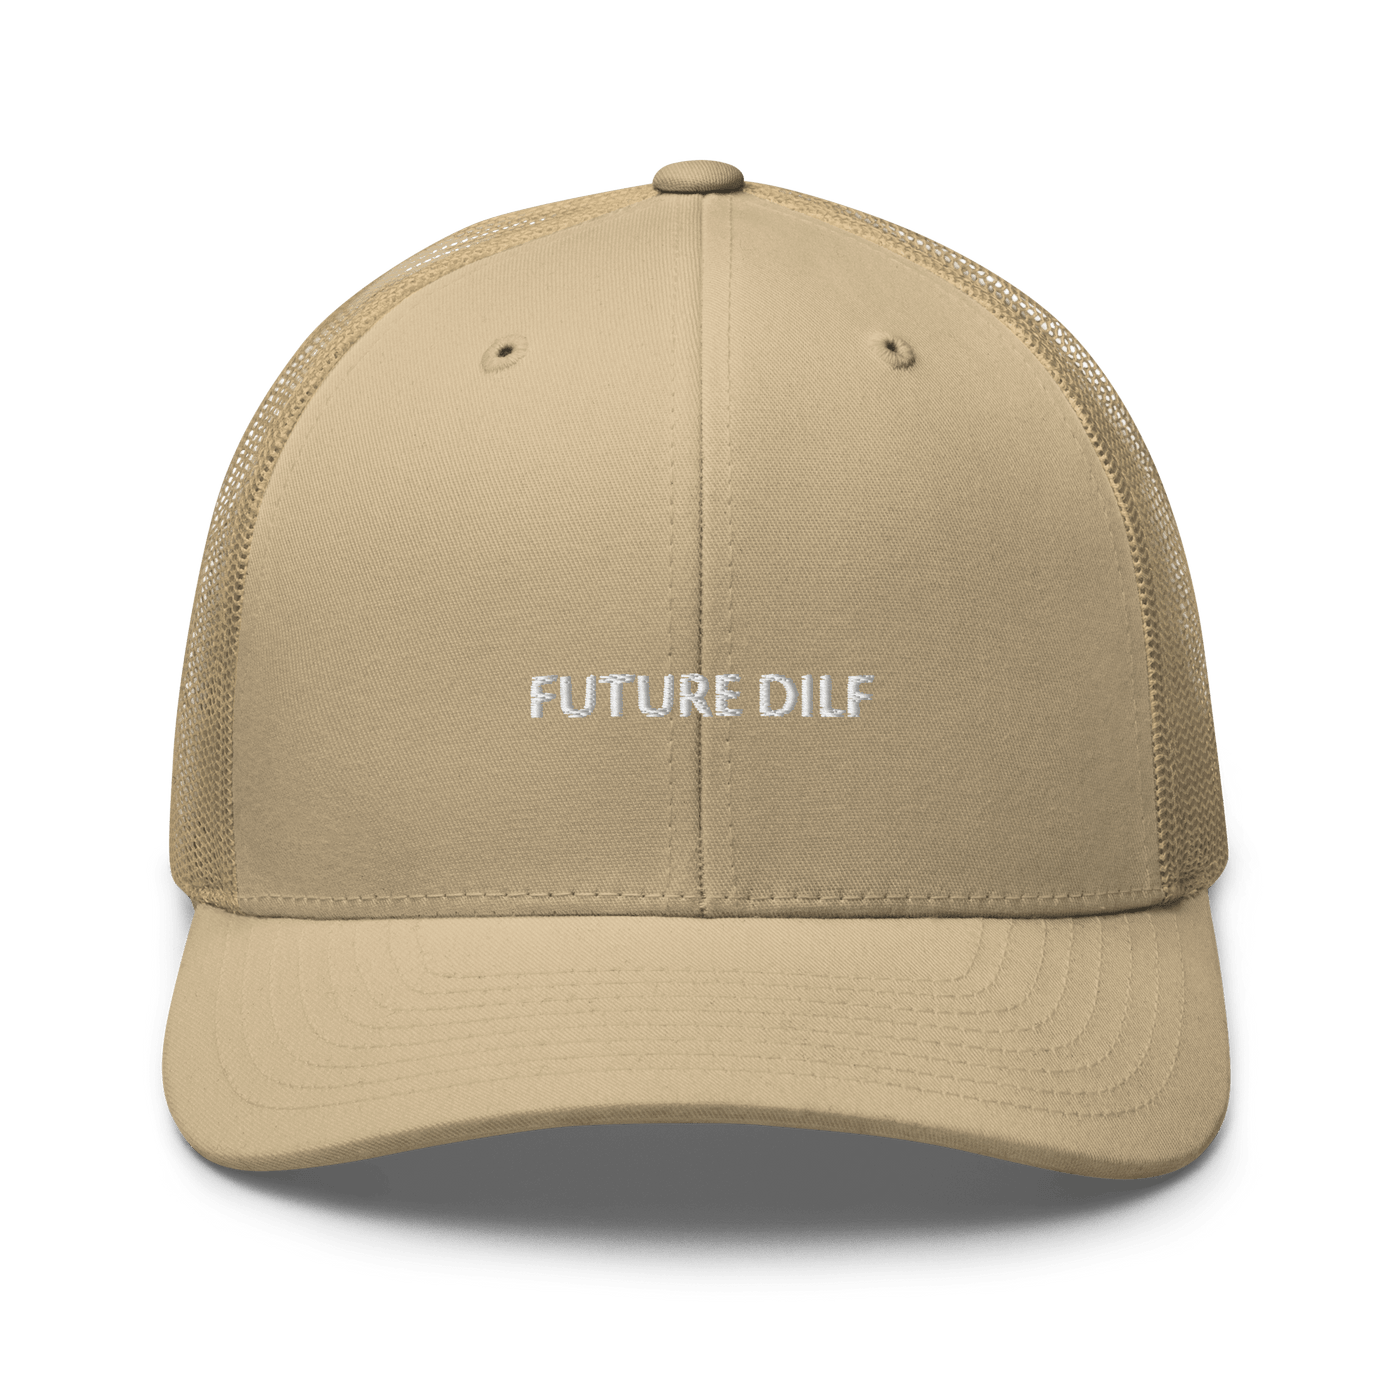 Future Dilf Trucker Cap - Khaki - - Just Another Cap Store